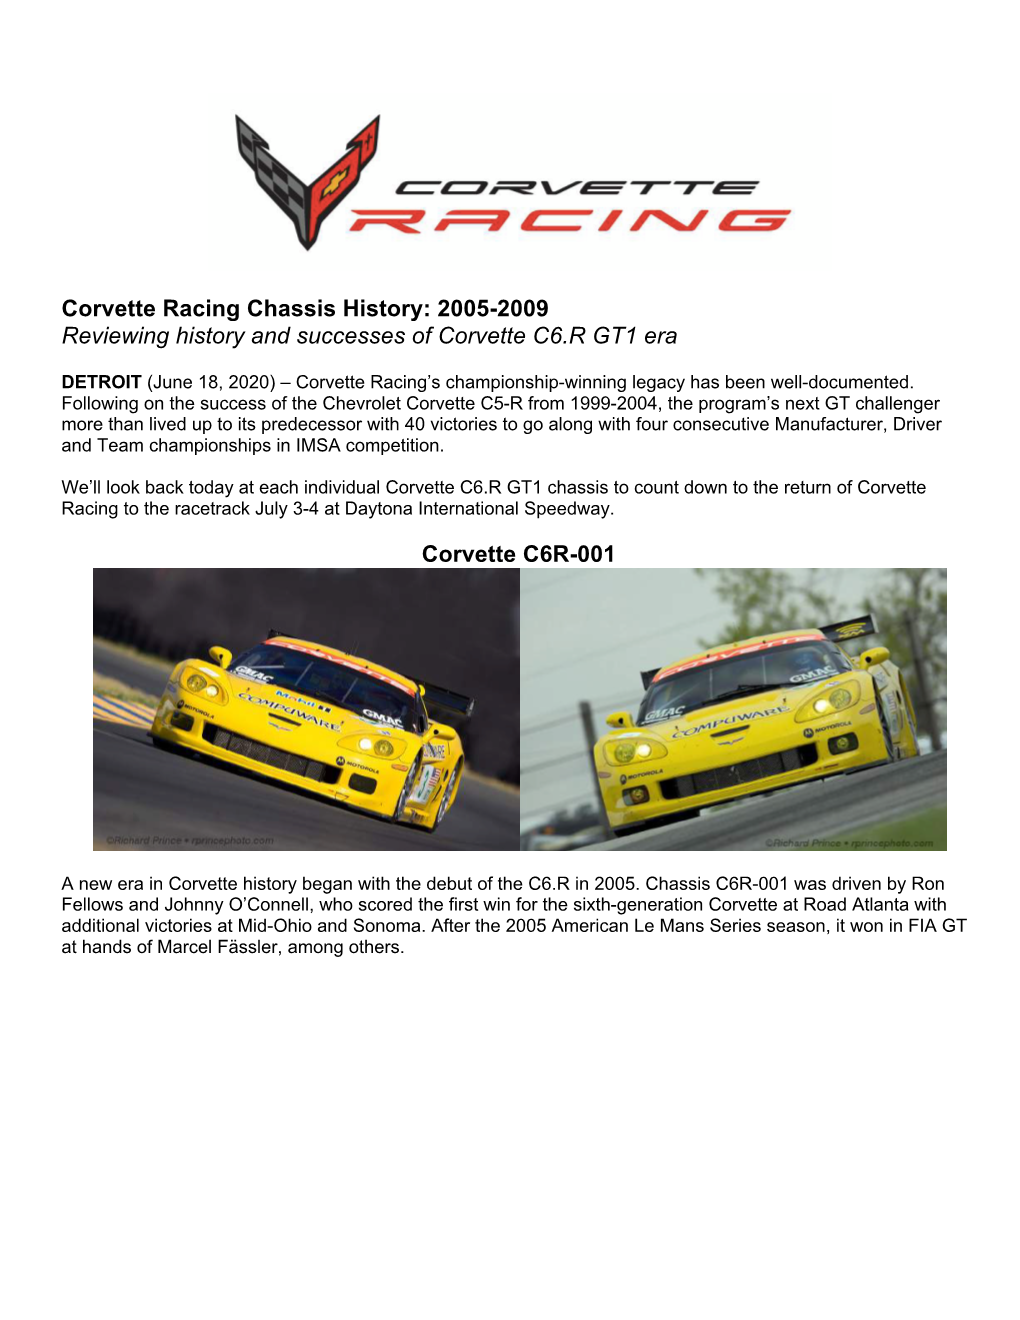 2020 Corvette Racing C6R History RS